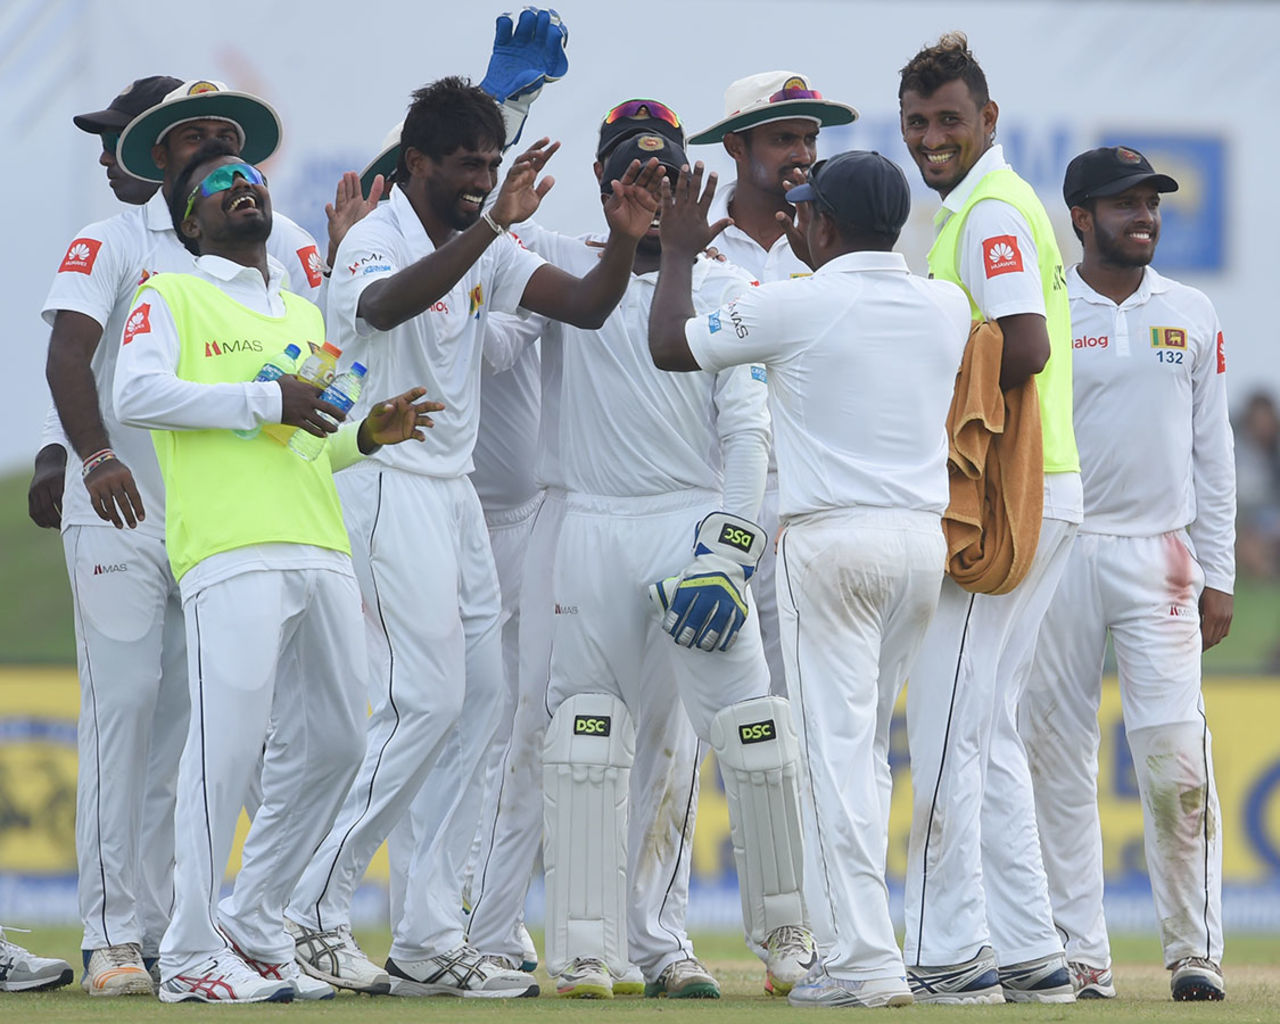 An elated Nuwan Pradeep celebrates Virat Kohli's wicket with his team-mates, Sri lanka v India, 1st Test, Galle, 1st day, July 26, 2017